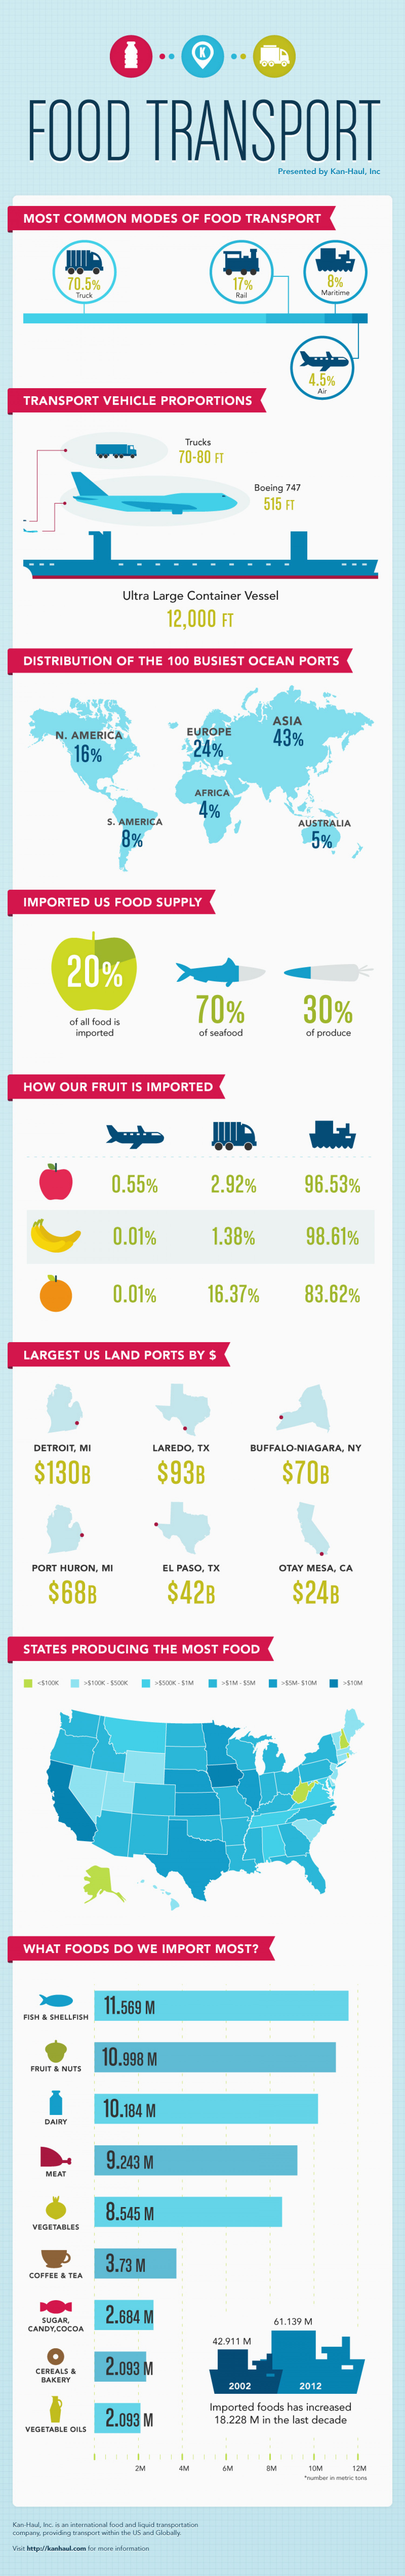 Food Transport Infographic